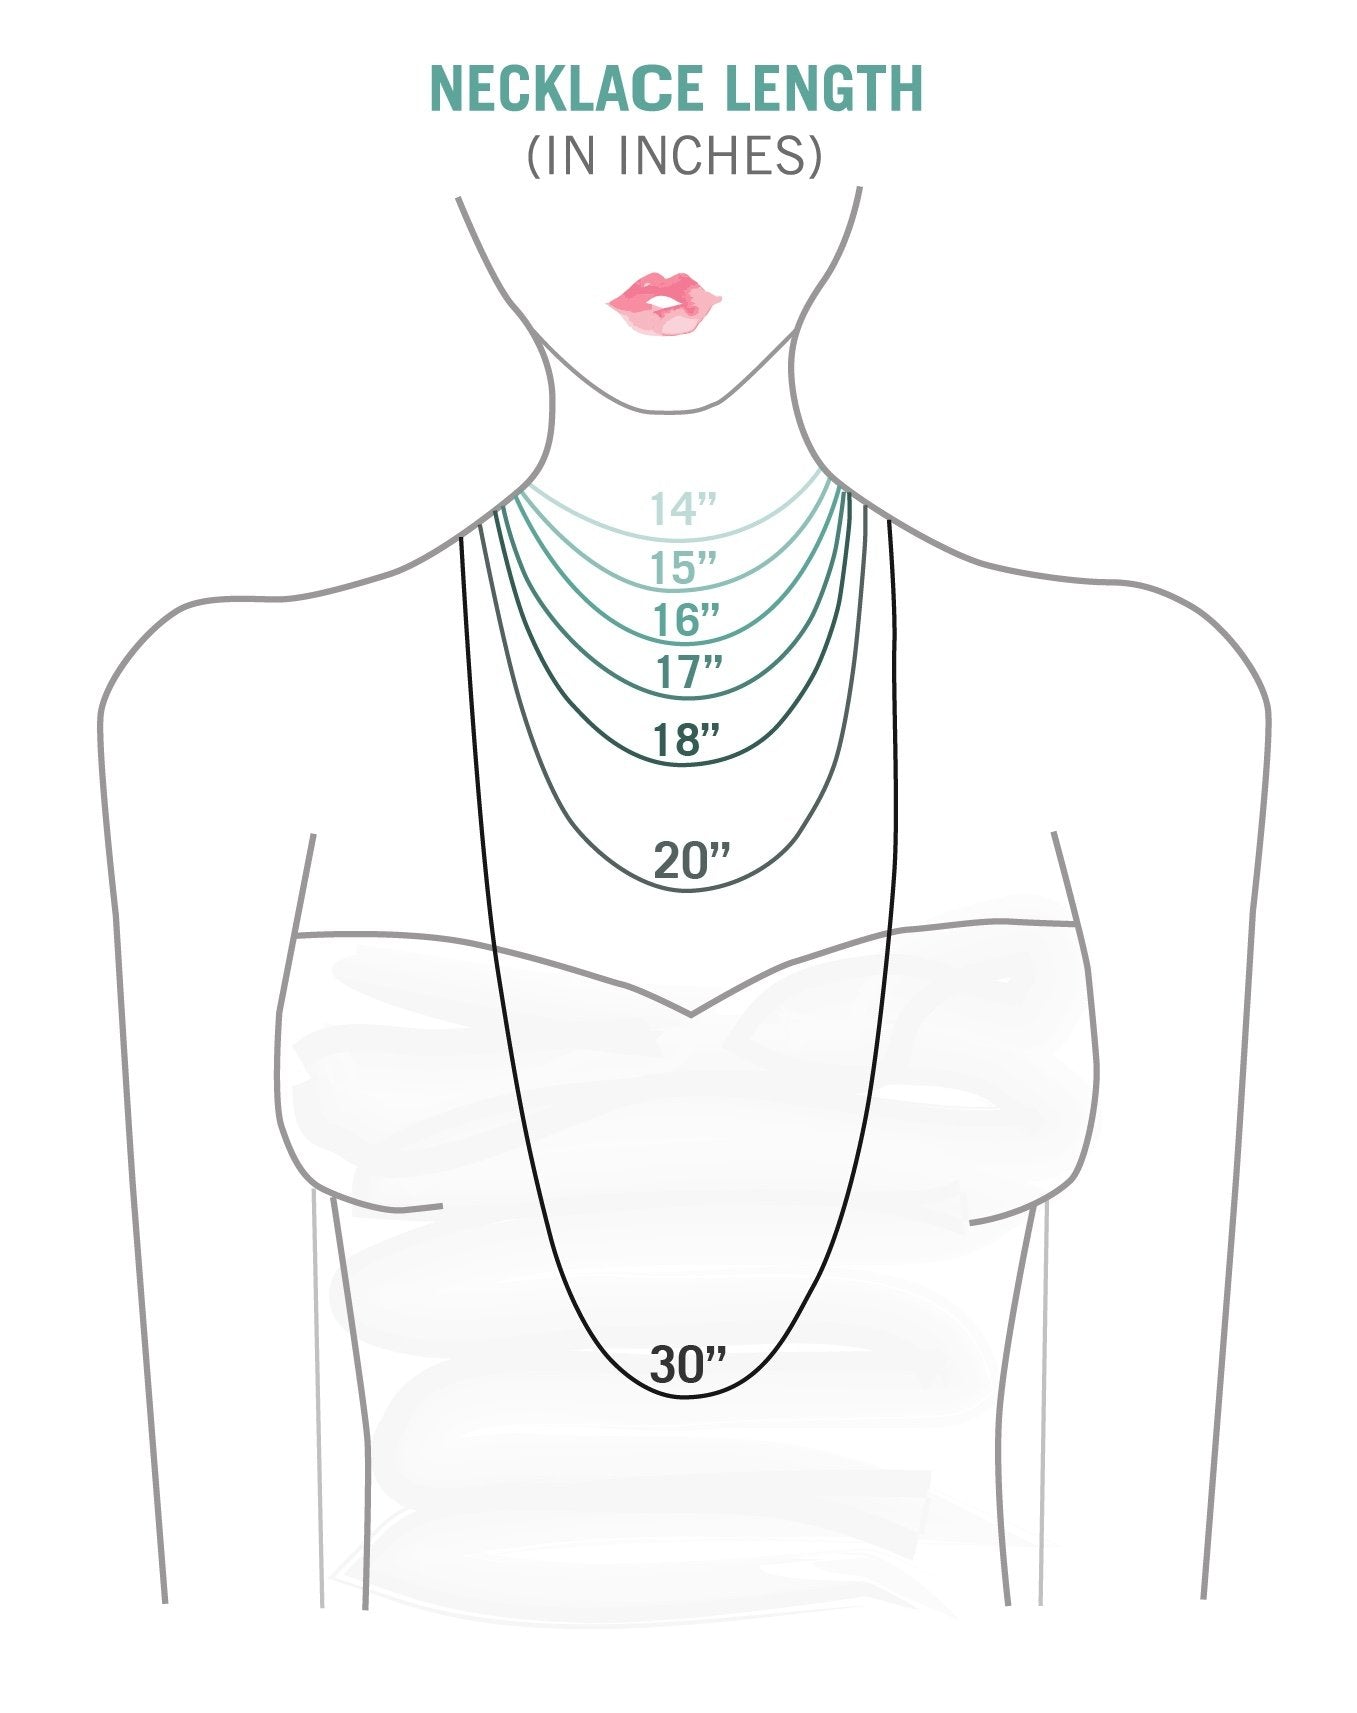 Necklace Sizing Chart